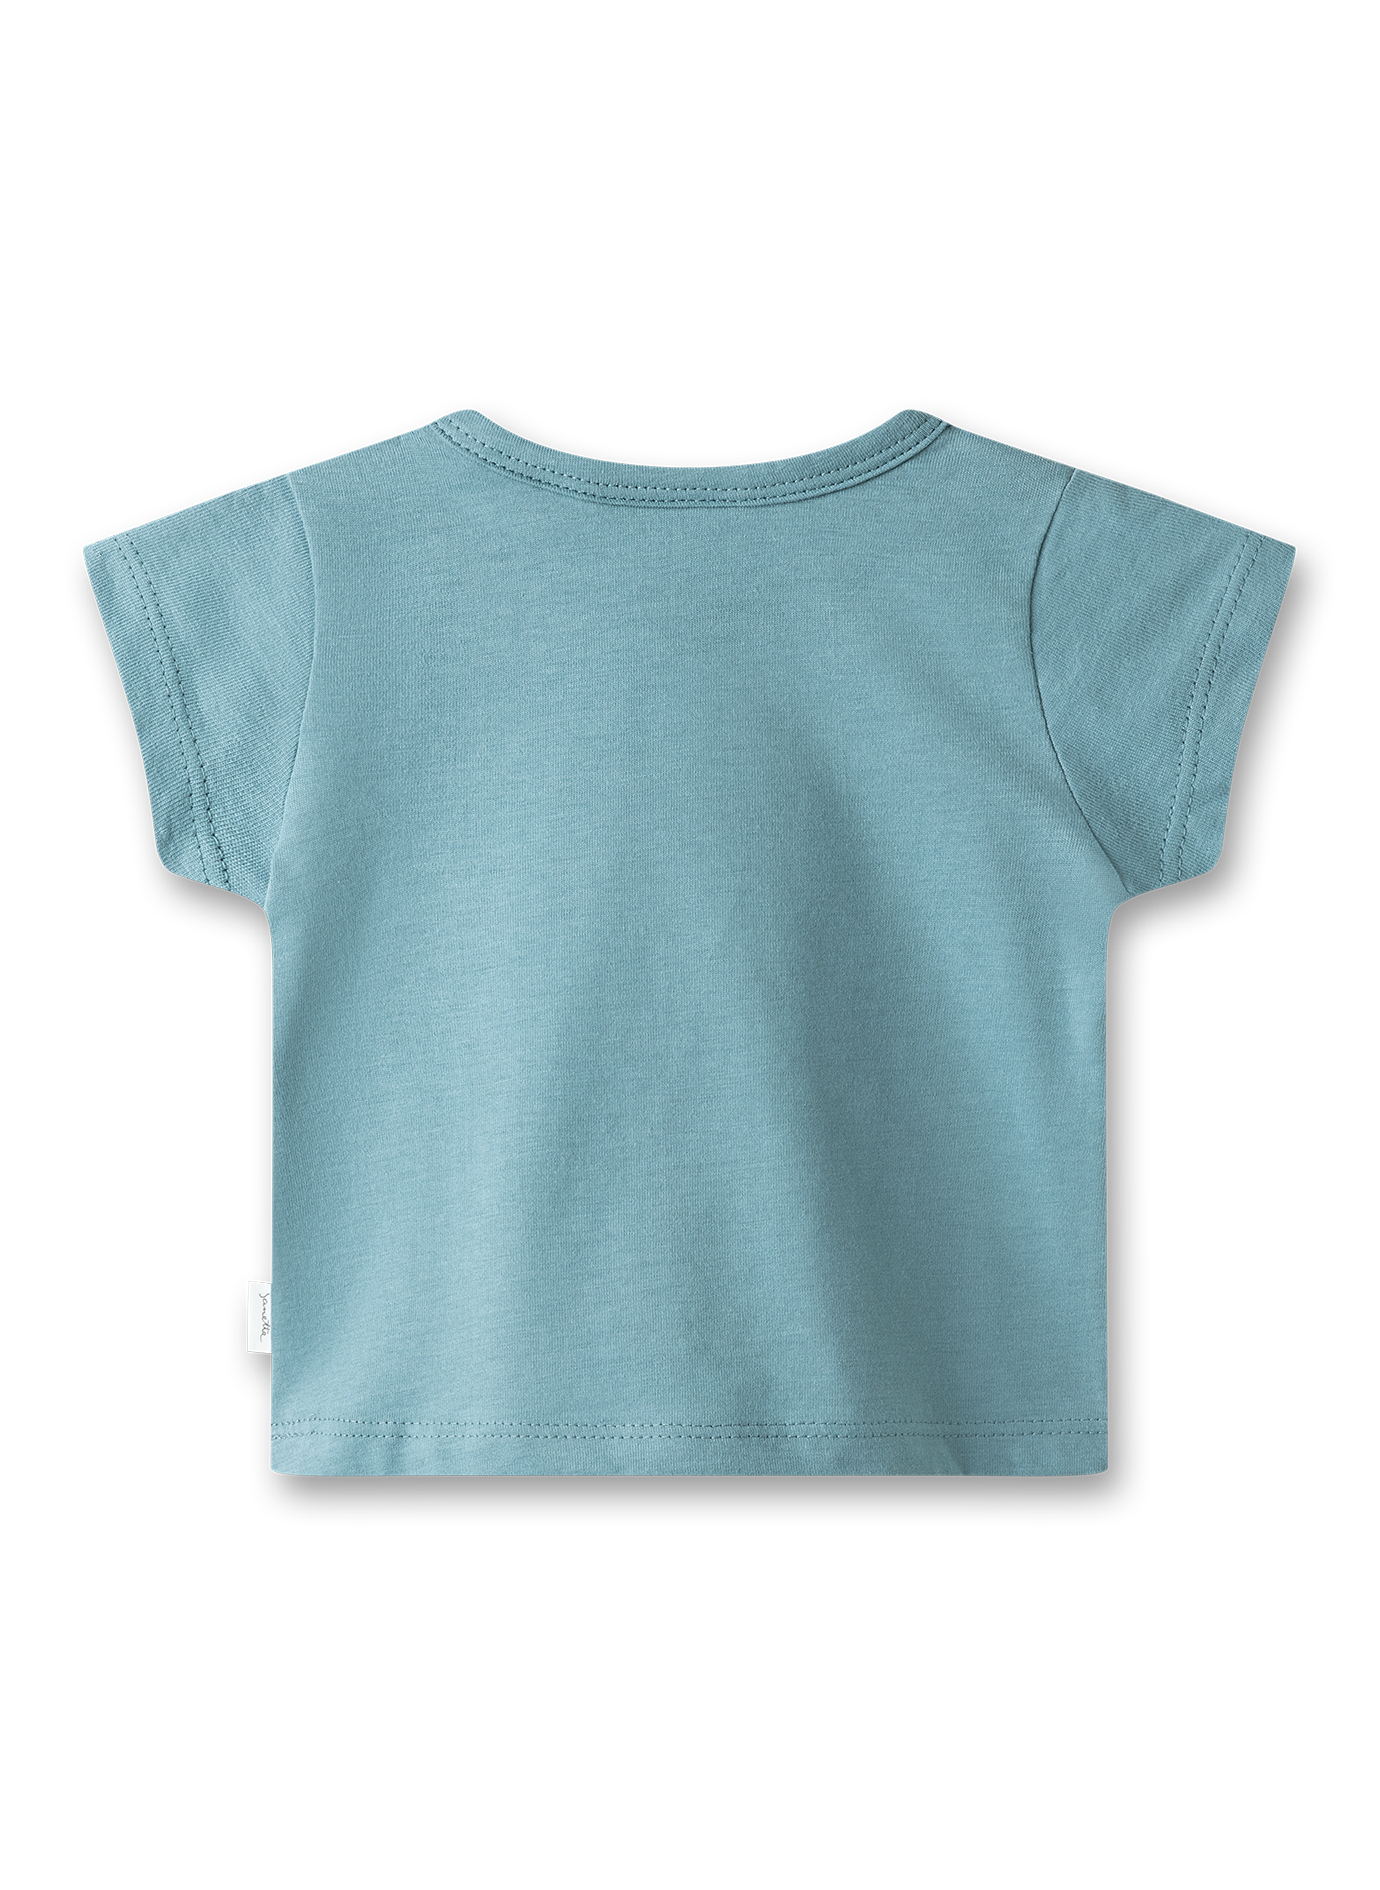 Mädchen T-Shirt Hellblau